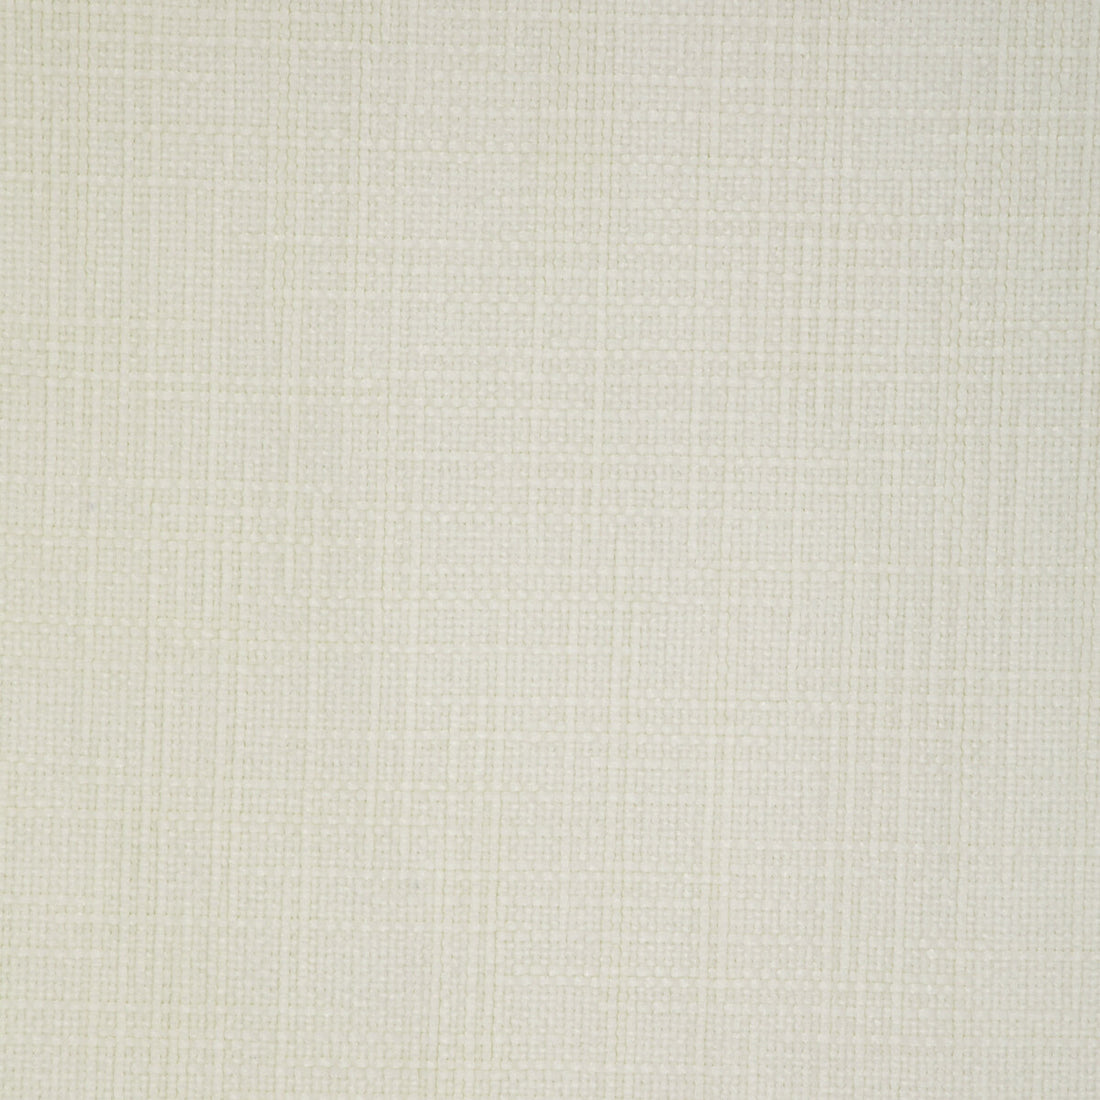 Kravet Smart fabric in 36991-1 color - pattern 36991.1.0 - by Kravet Smart in the Performance Kravetarmor collection